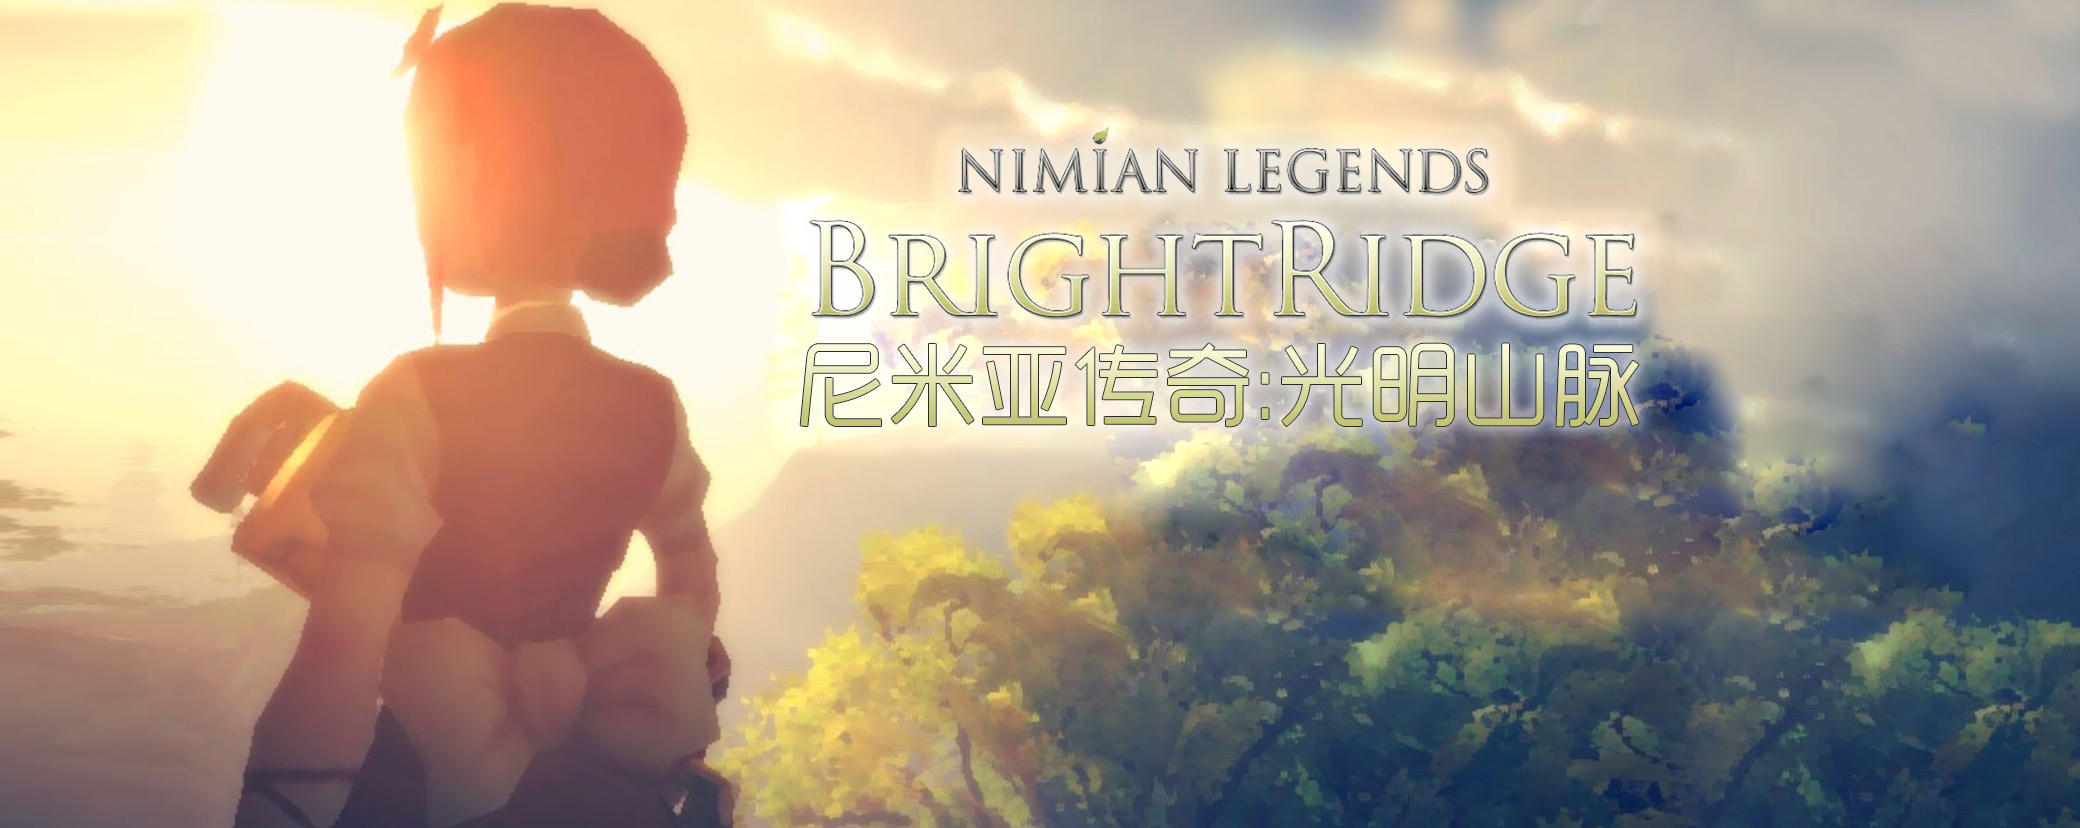 Banner of Leggende di Nimian : BrightRidge 